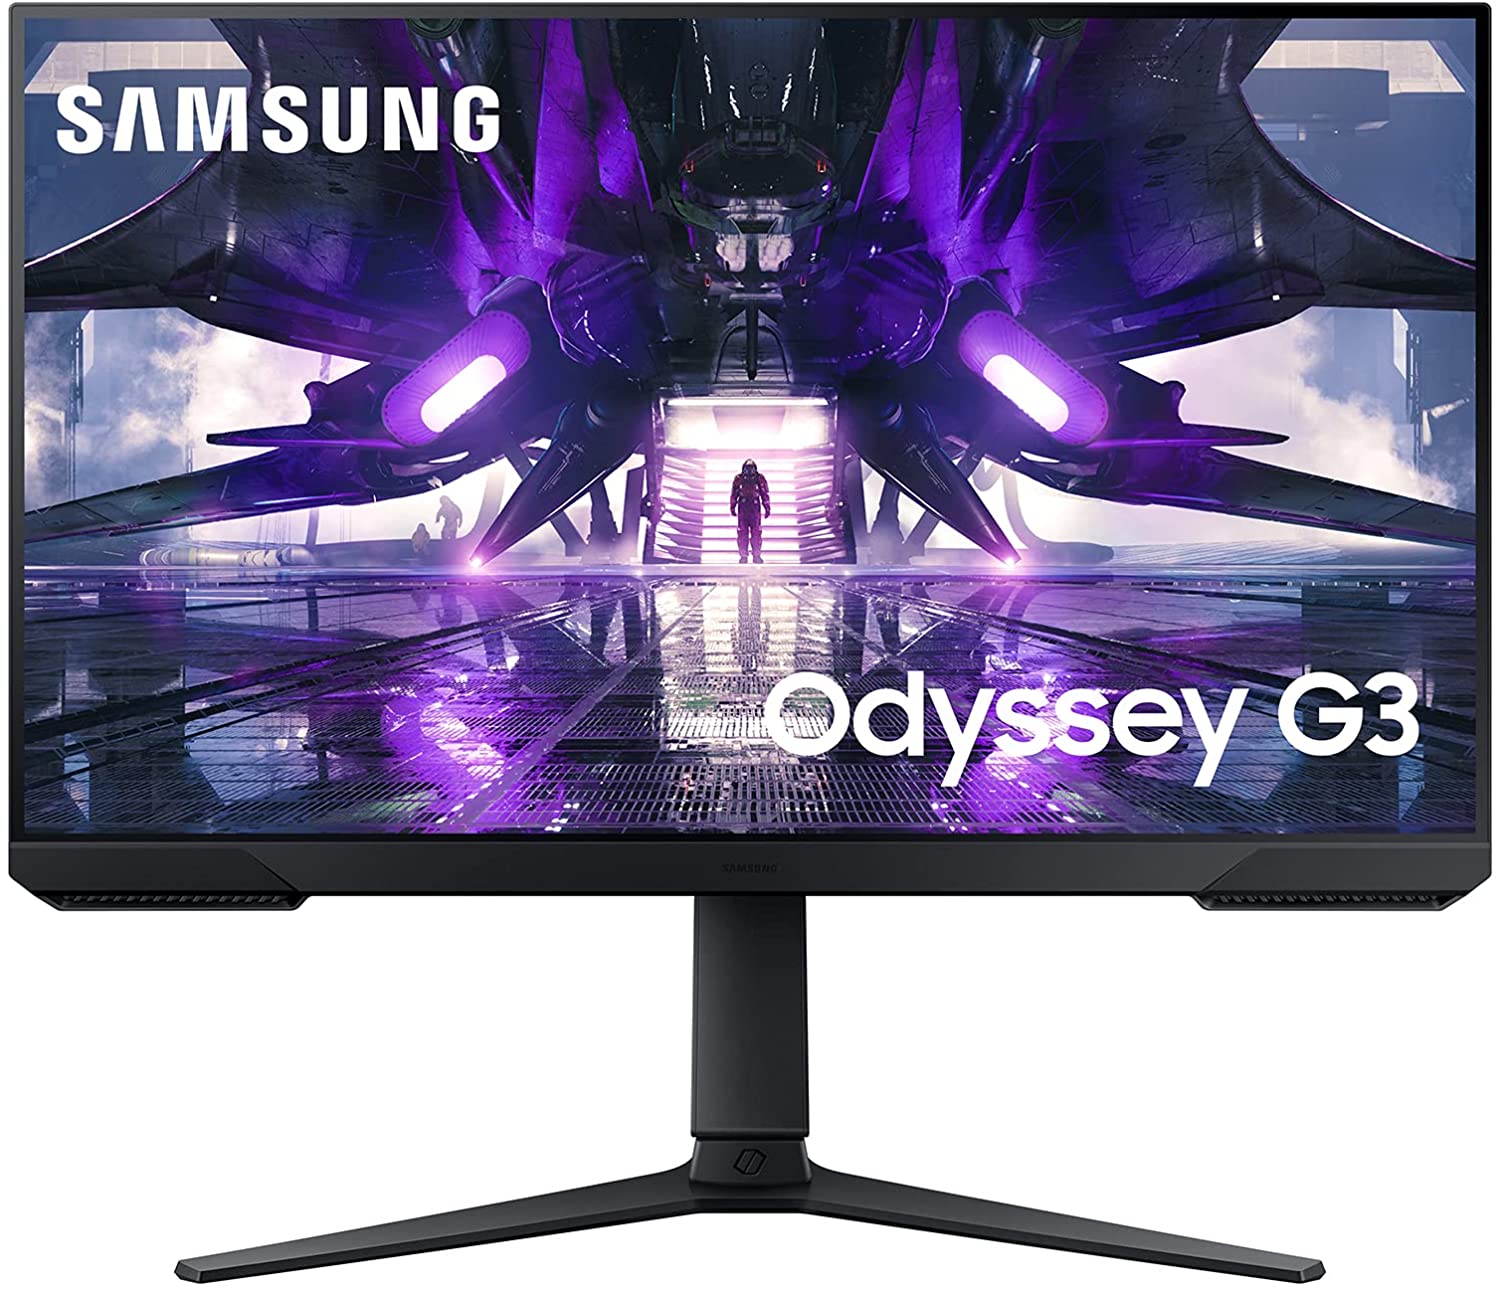 Bon plan&nbsp;:&nbsp;l'écran PC Gamer Samsung Odyssey G3&nbsp;© Amazon